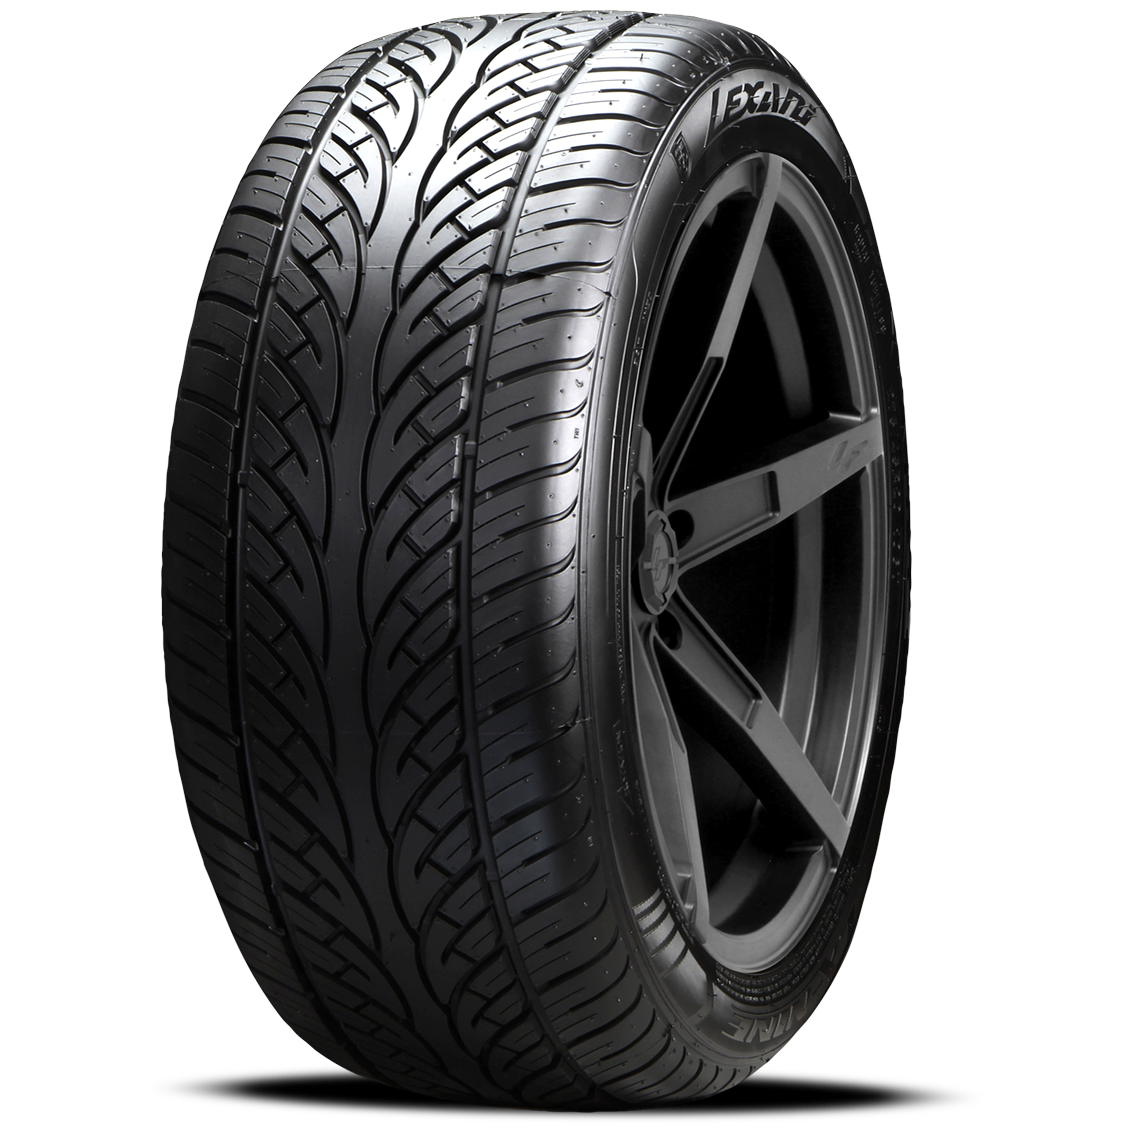 LEXANI LX-NINE 295/35R24 (32.1X11.9R 24) Tires